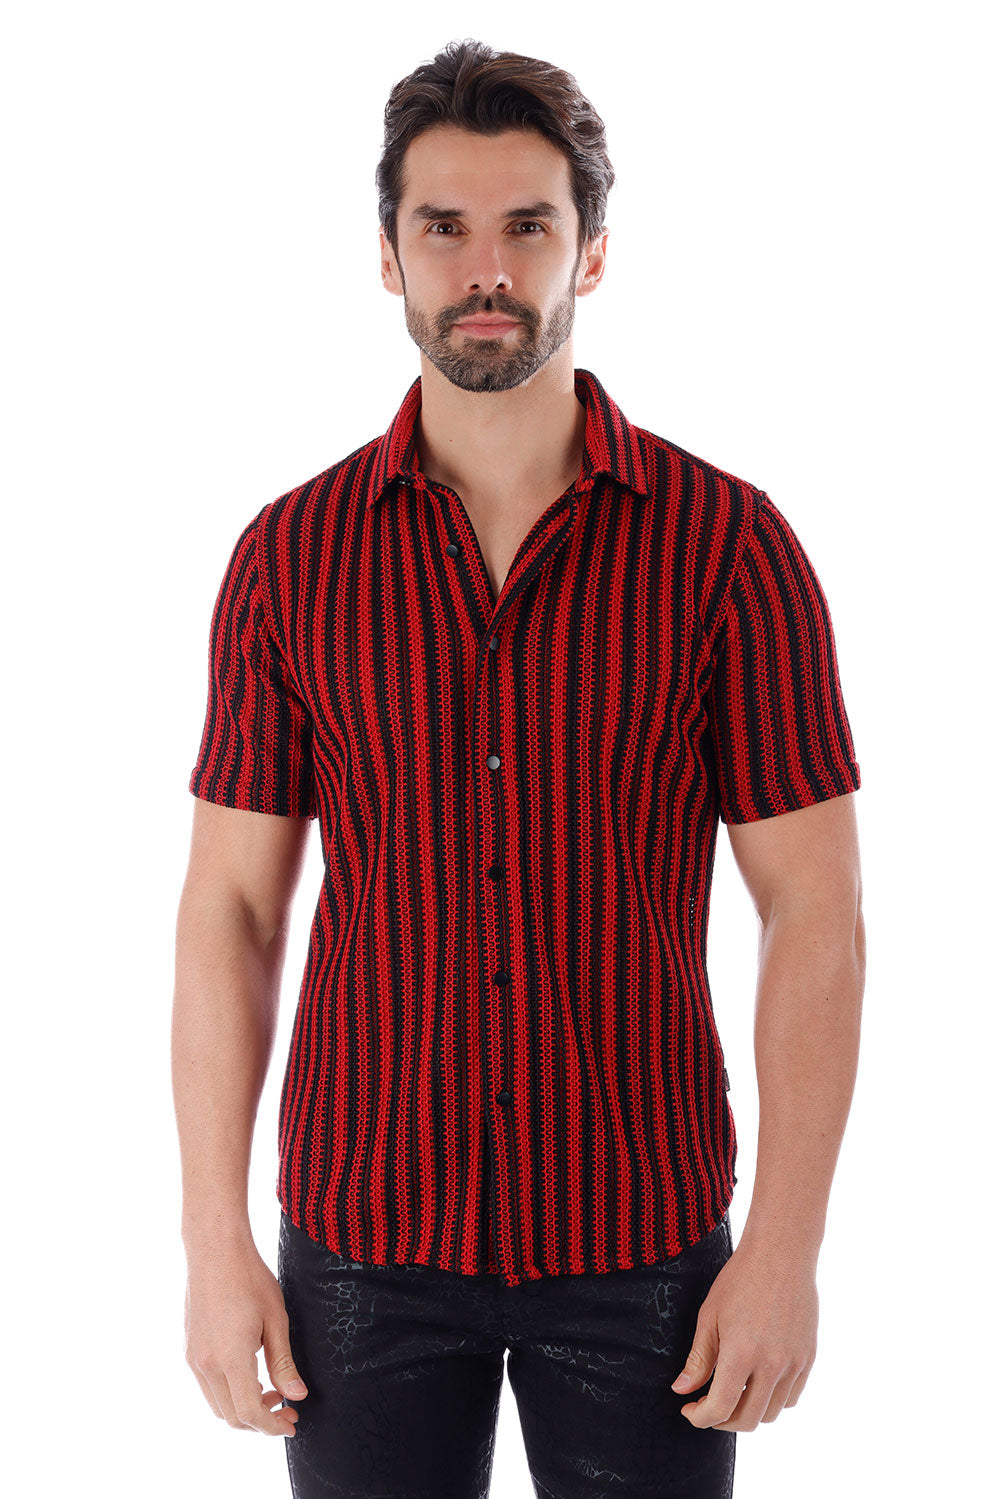 BARABAS Men's Knit Striped Crochet Knitted Short Sleeve Shirts 4SST01 Red